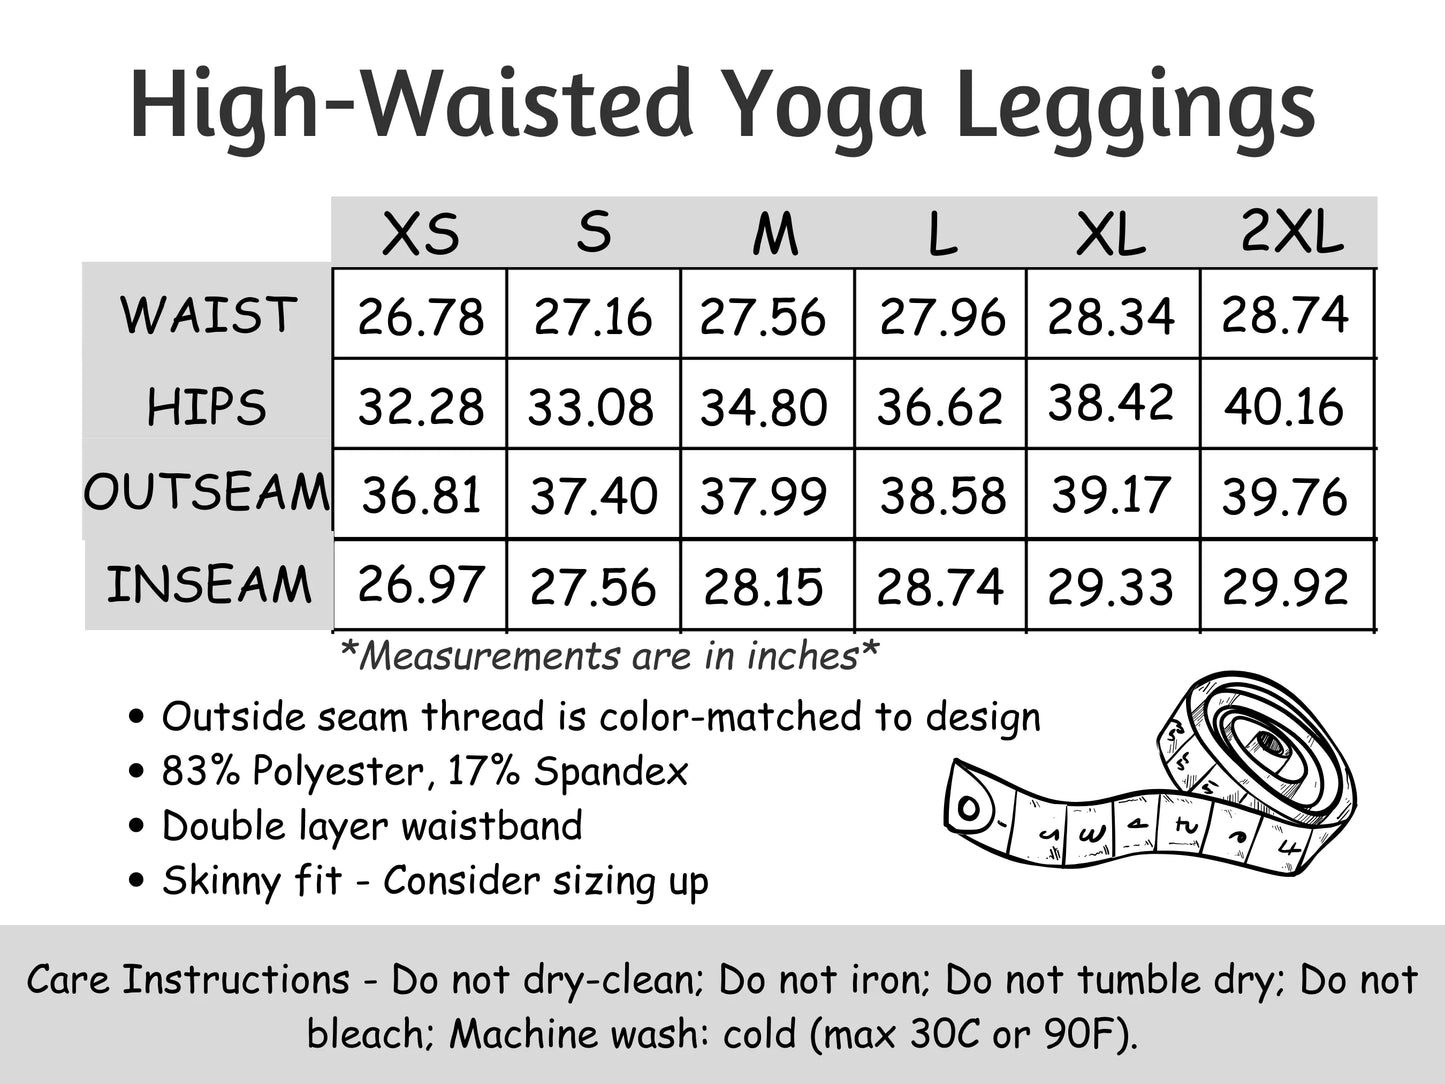 KMW Rain - High Waisted Yoga Leggings